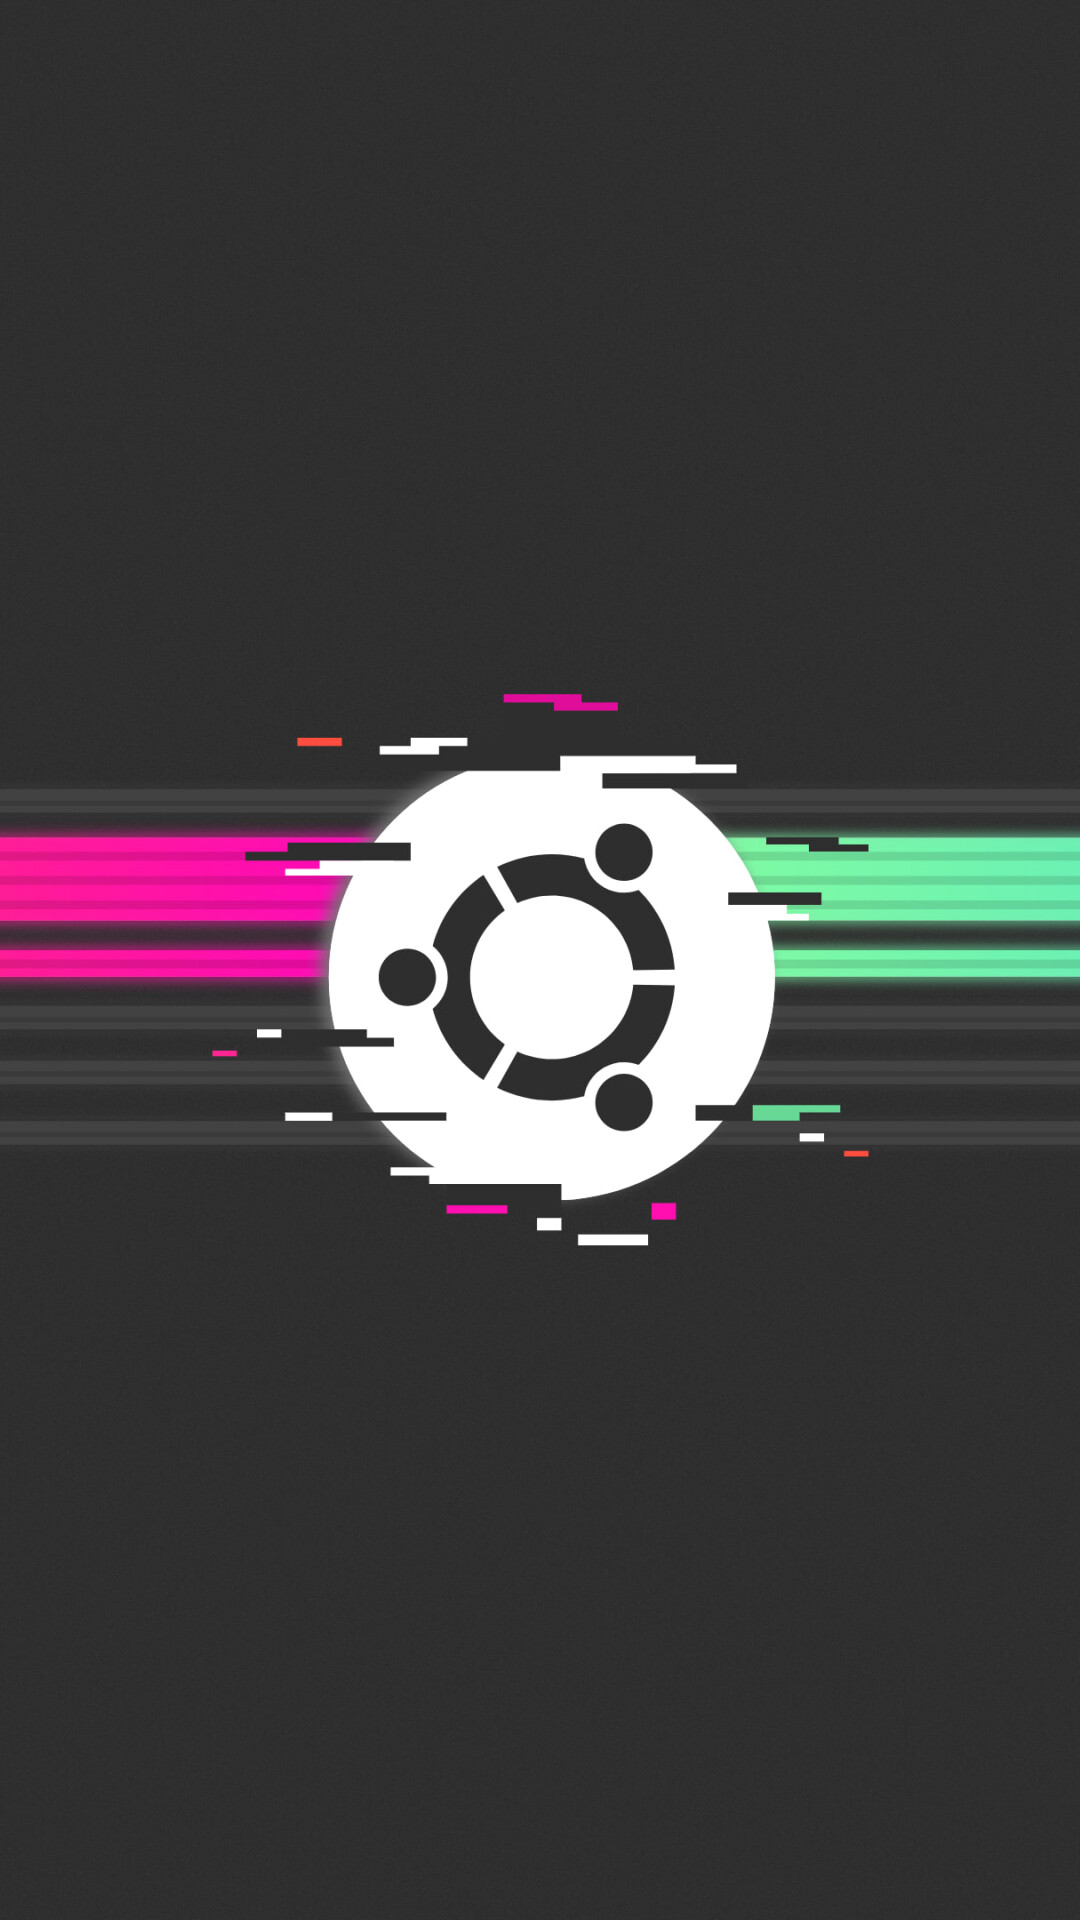 Glitch: Ubuntu, Minimalistic art, Multicolored parallel lines, Rectangles. 1080x1920 Full HD Background.